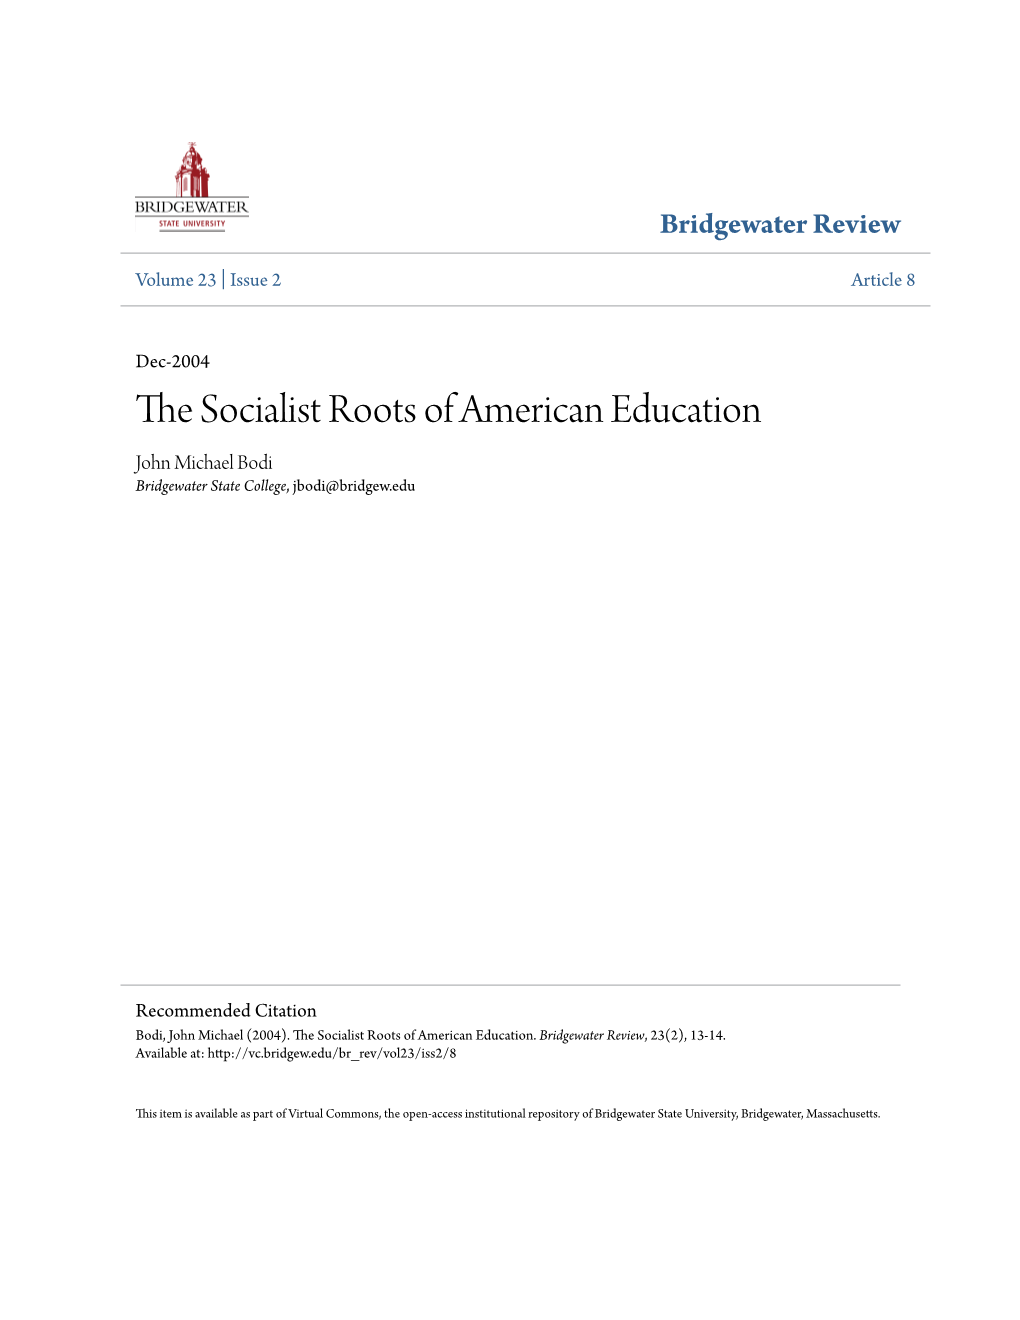 The Socialist Roots of American Education by John Michael Bodi